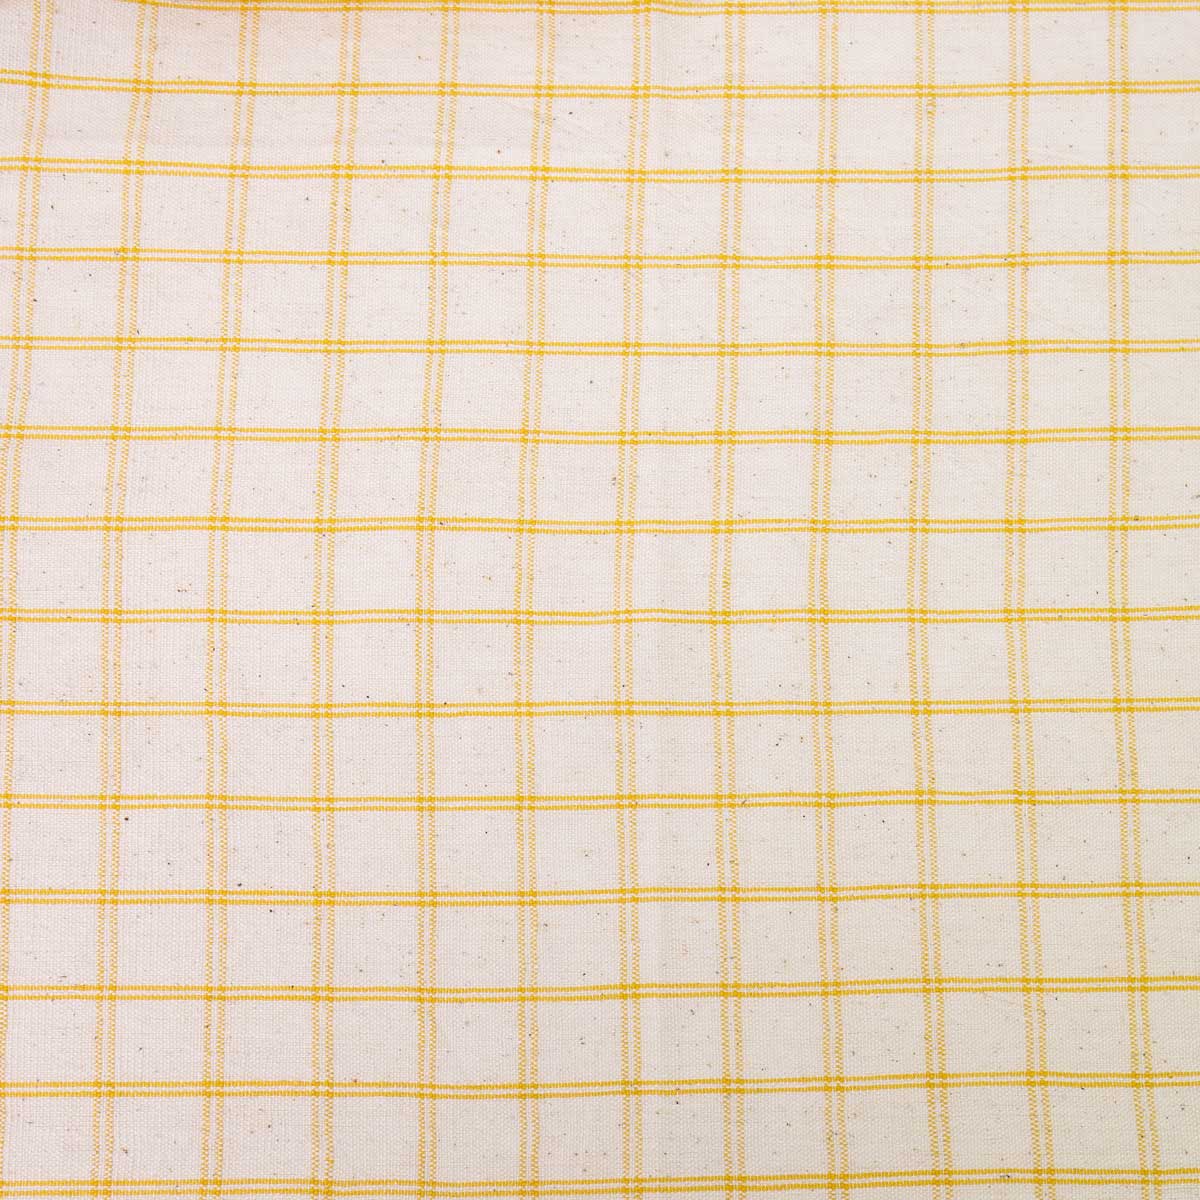 ECO DOUBLEGRID Fabric, offwhite/yellow